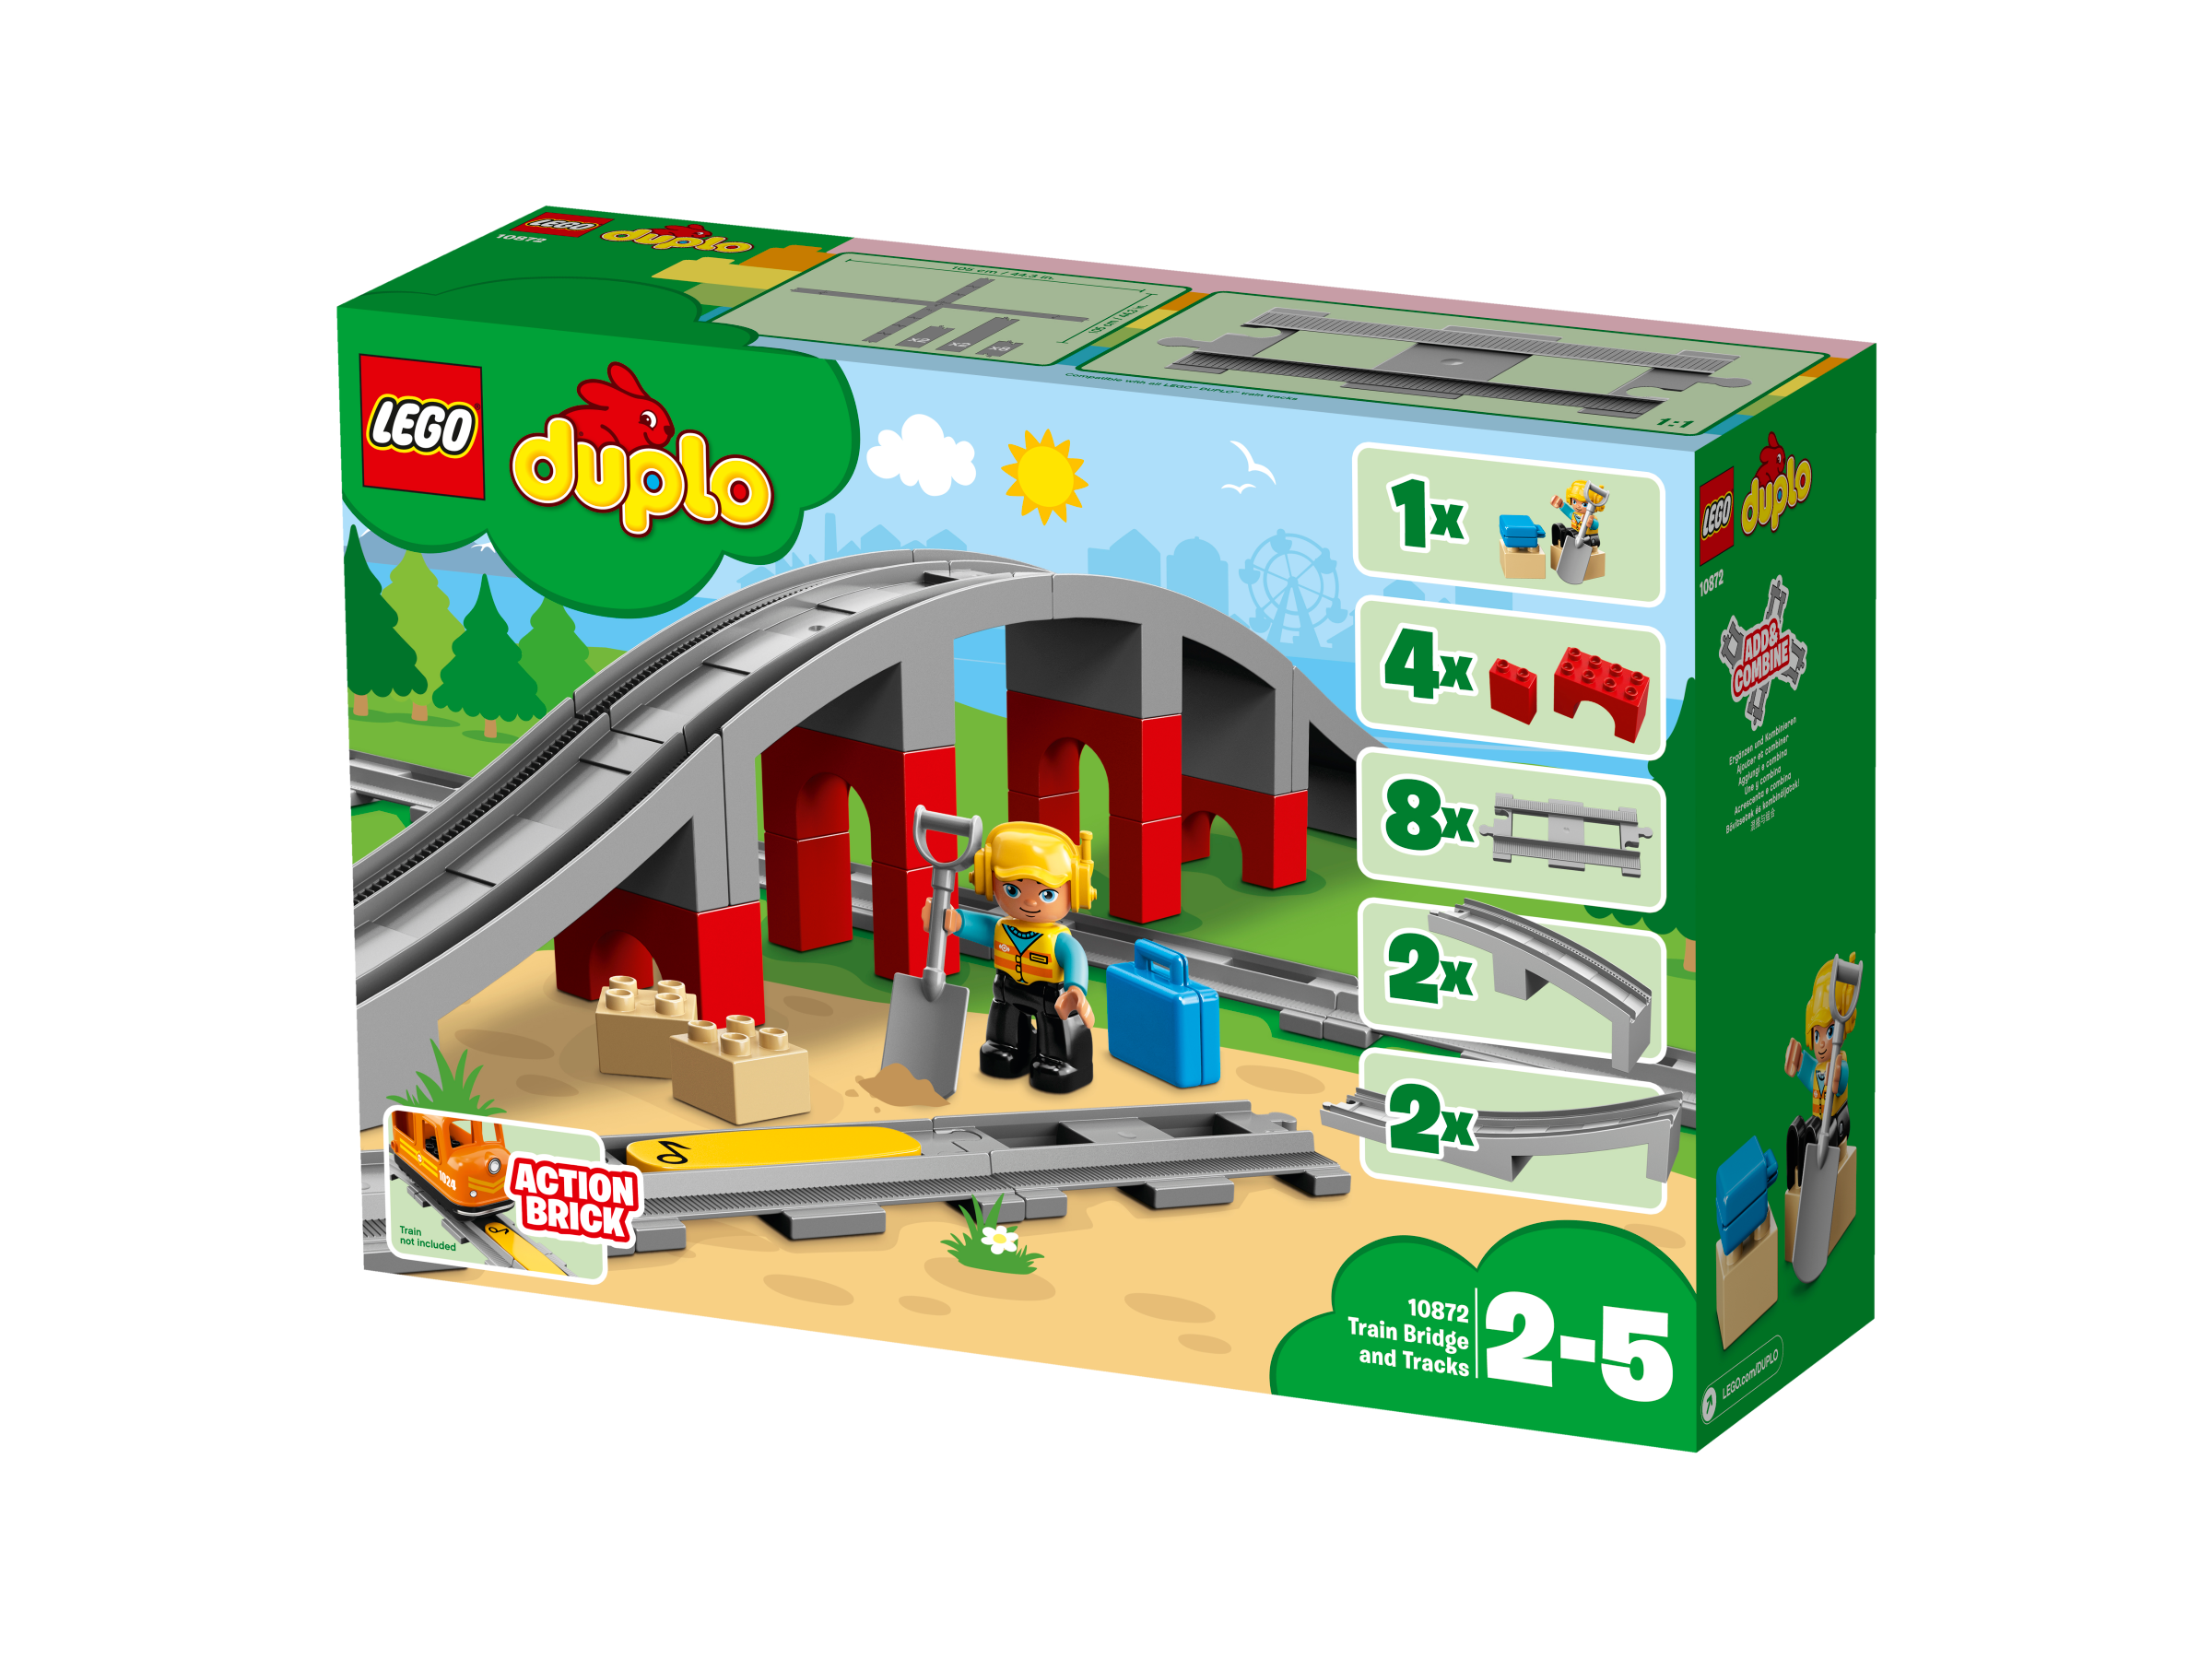 Lego 10872 Duplo Train Bridge & Tracks